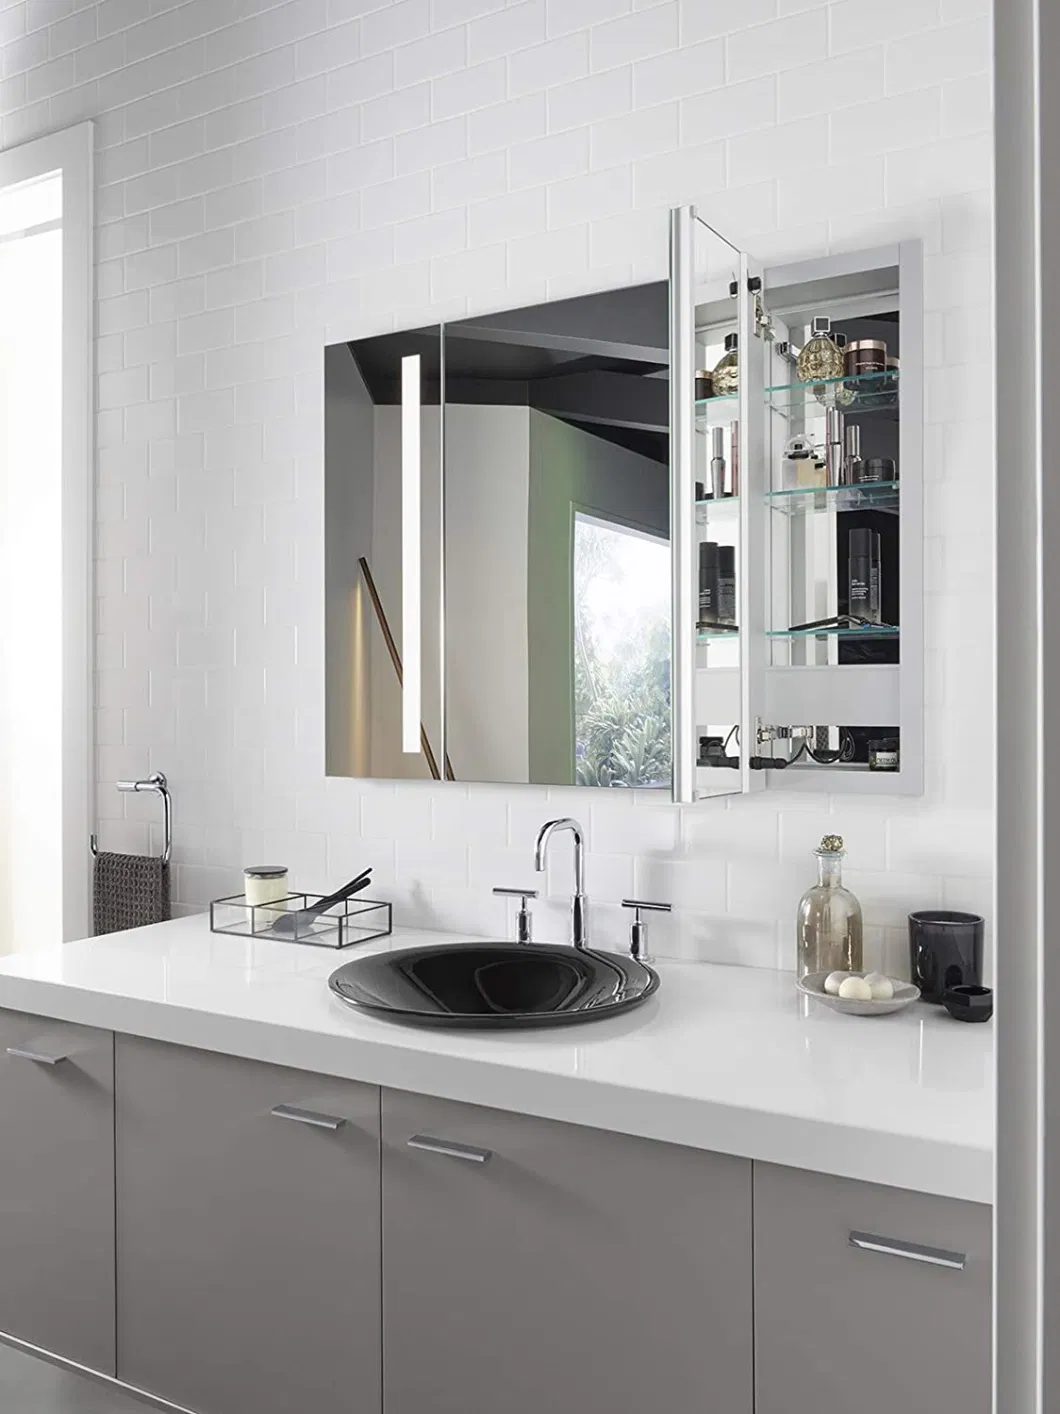 Wholesale Price Aluminum MDF Material LED Mirror Bathroom Vanity Lighted Cabinet Sanitary Ware Furniture